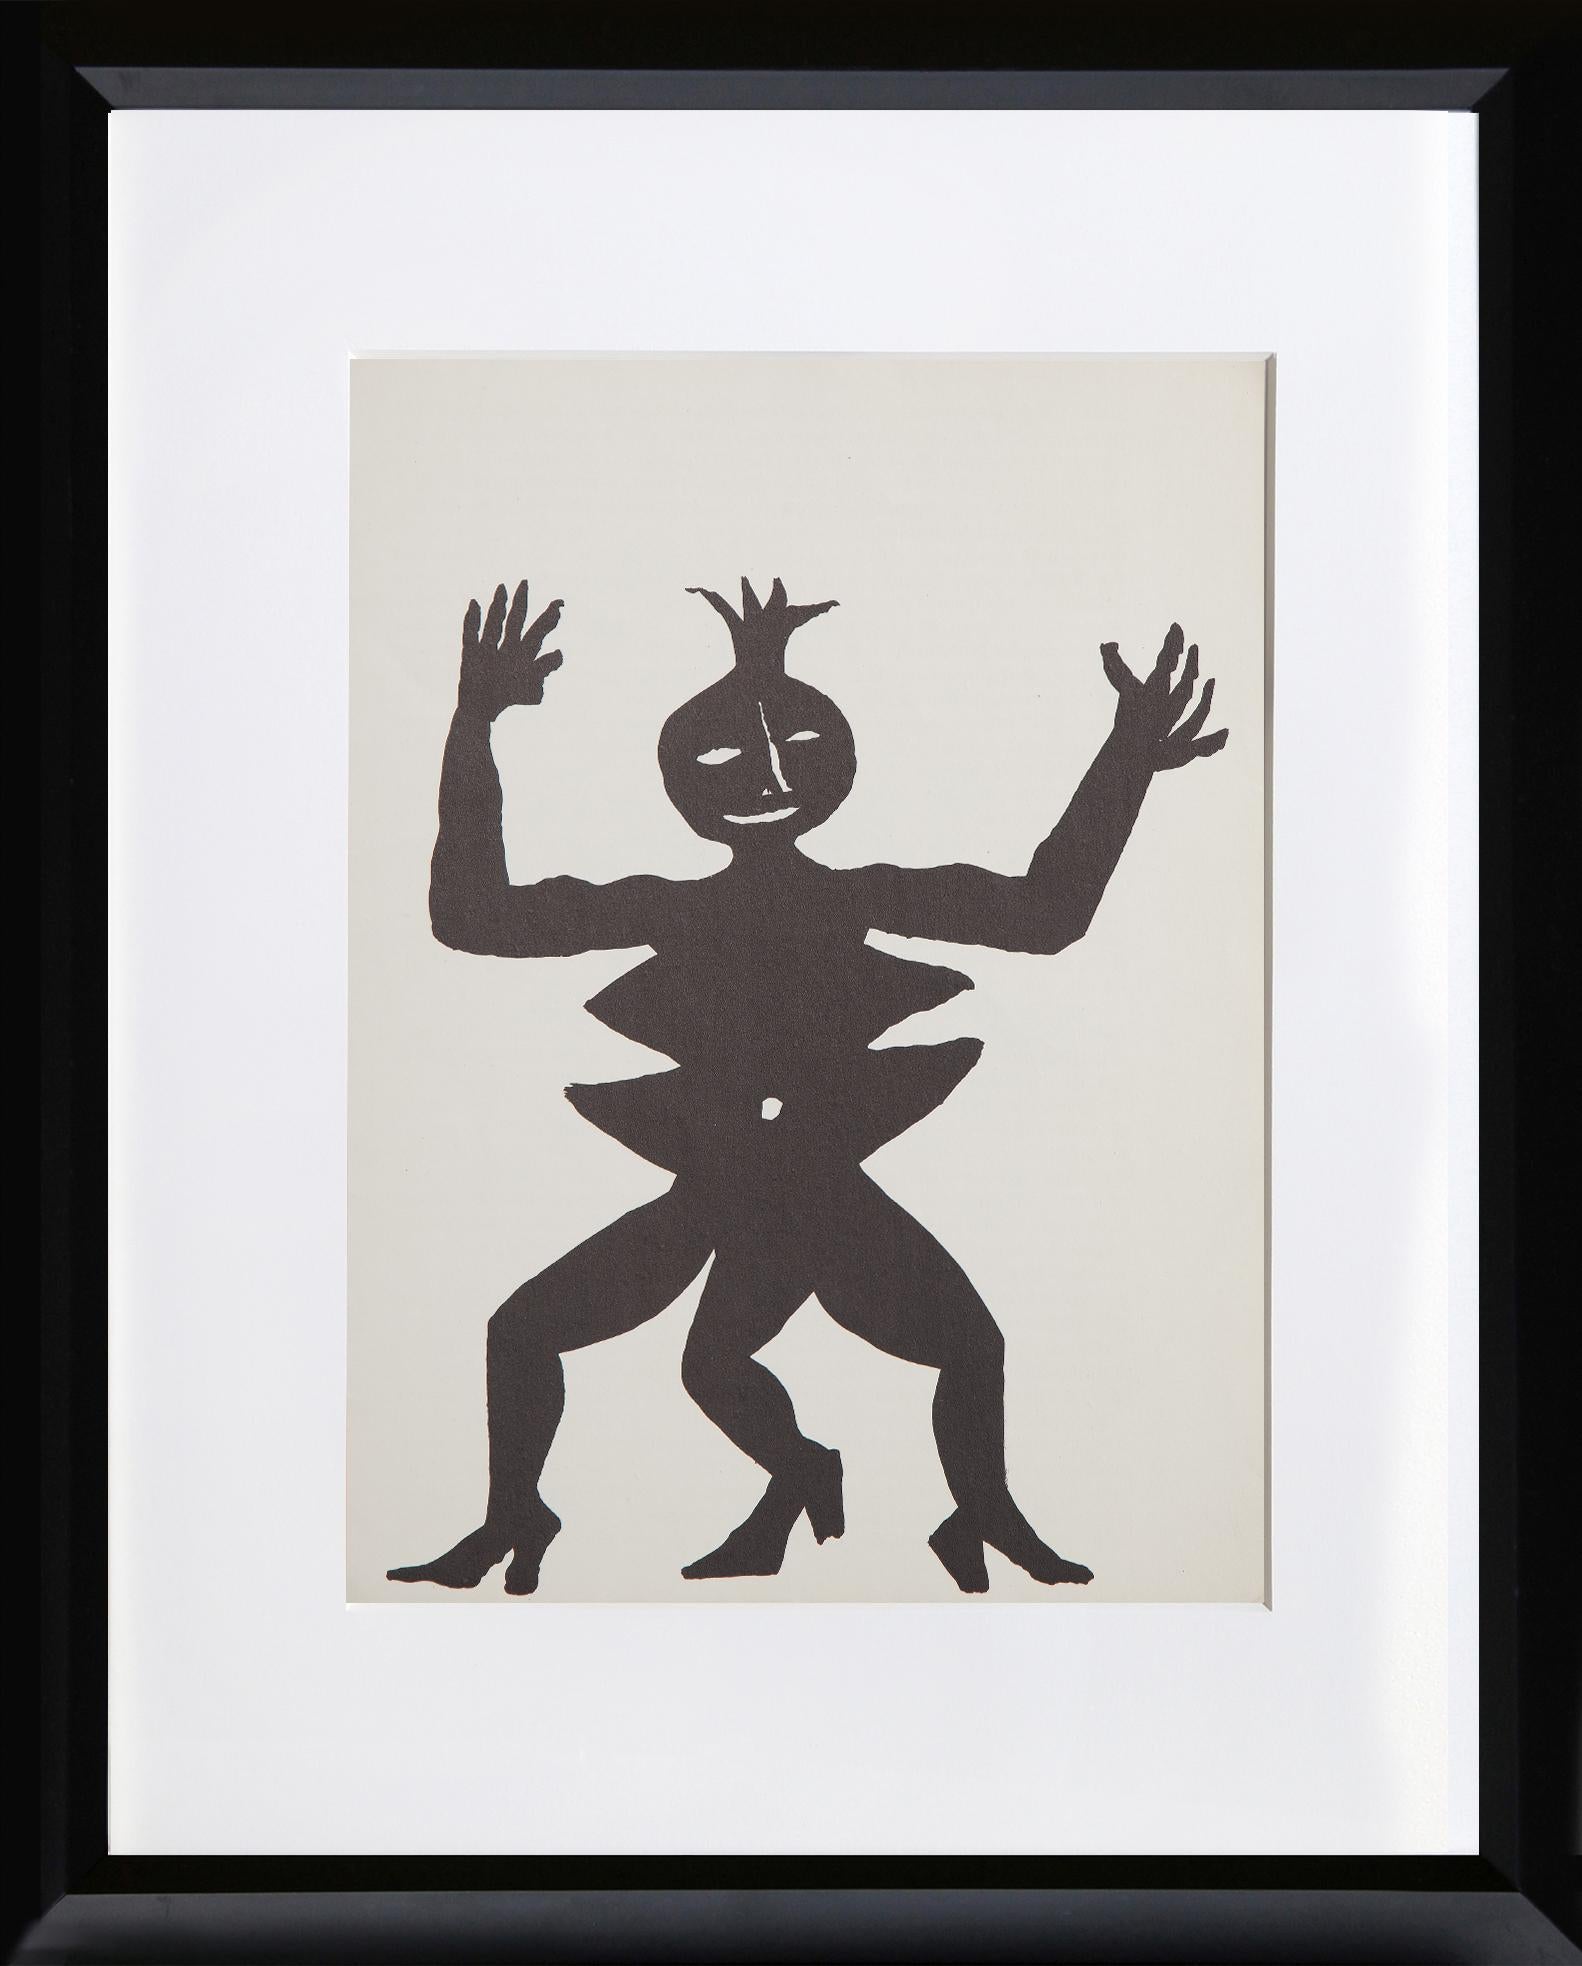 Which characteristics describe Alexander Calder’s sculptures?